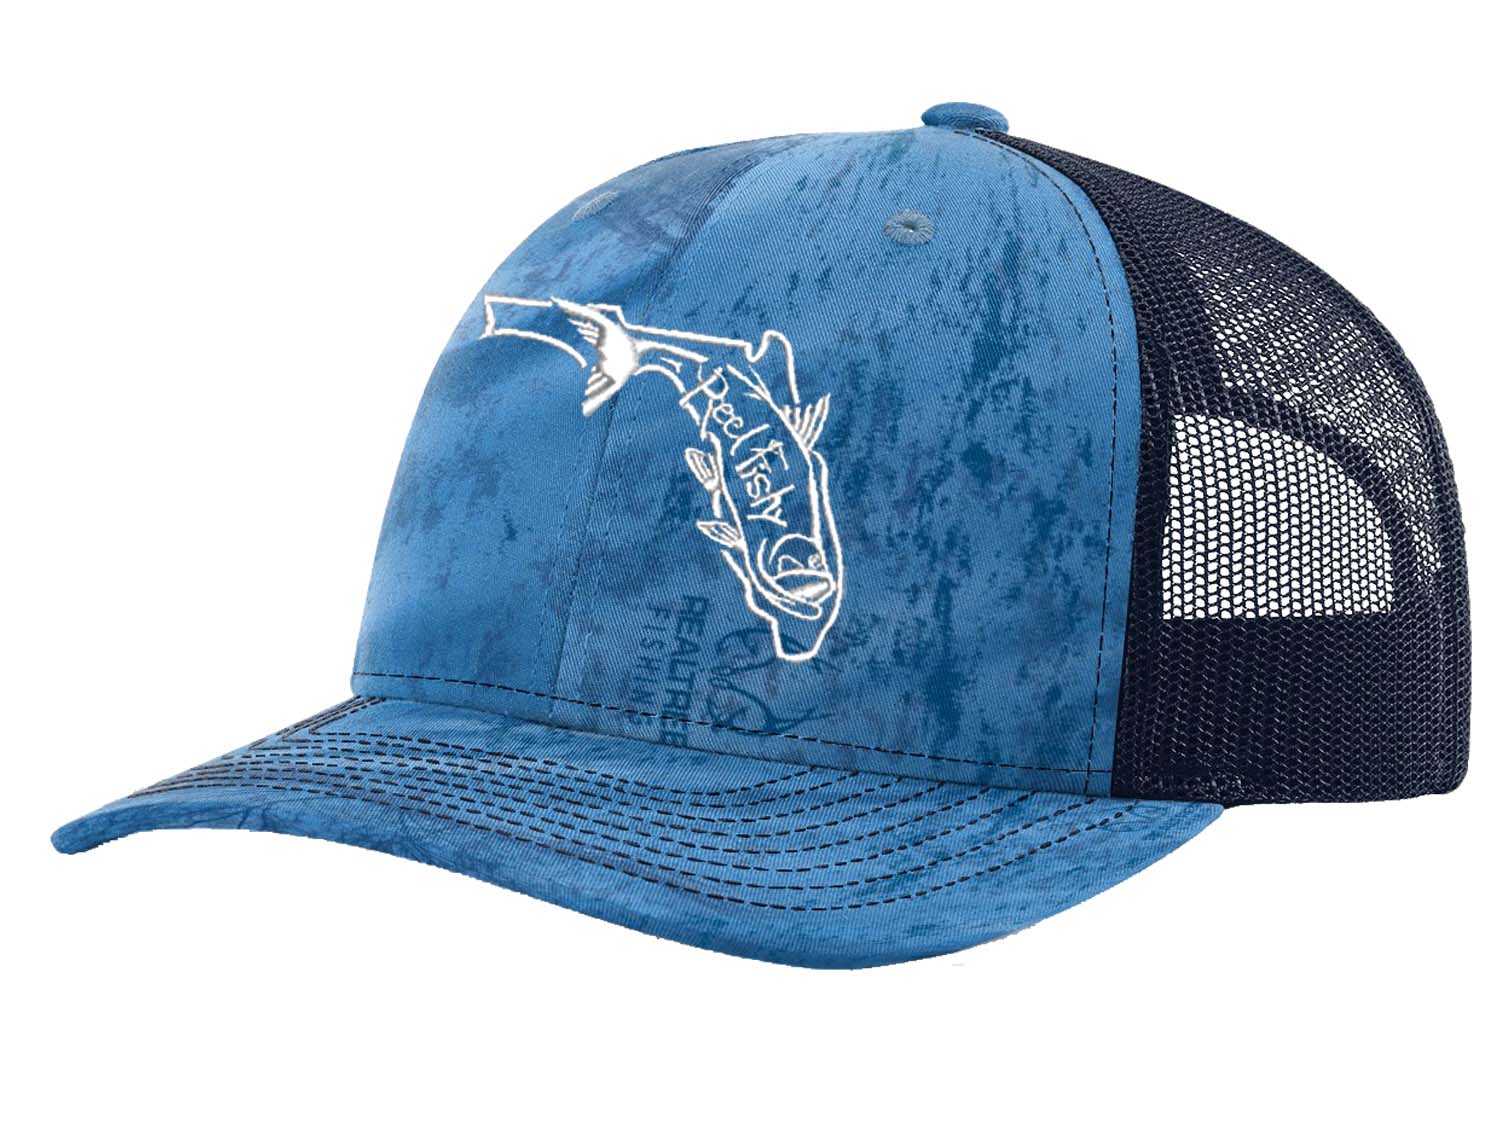 Realtree Blue/Navy Trucker Hat - State of Florida Reel Fishy Tarpon logo